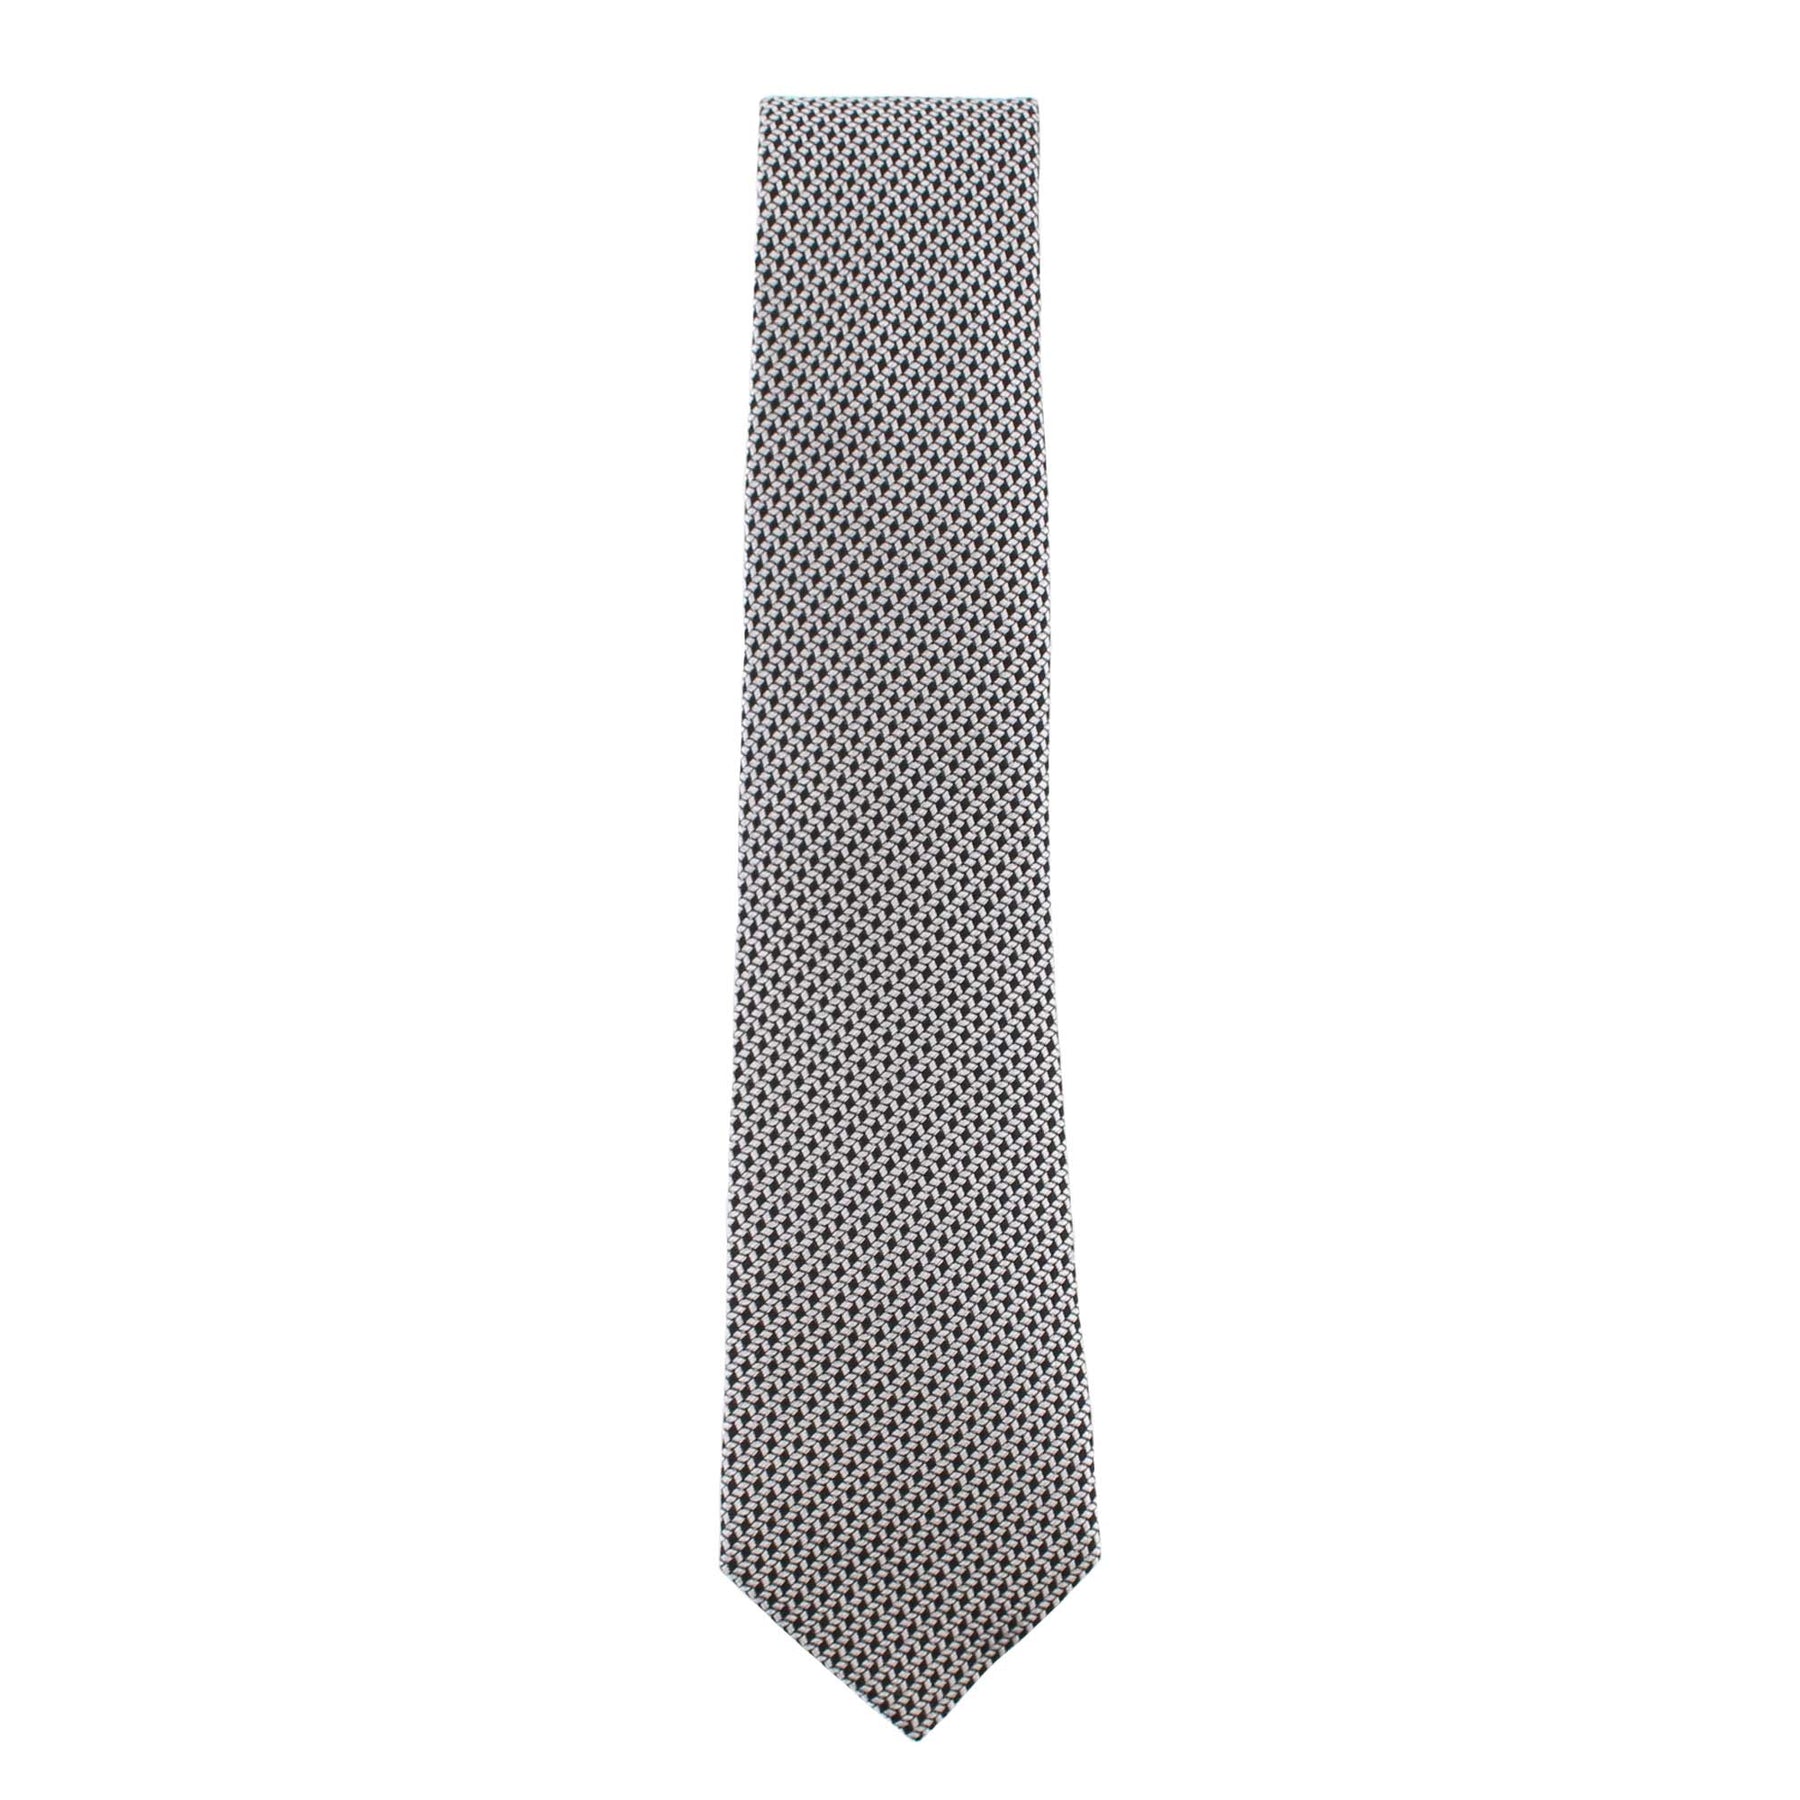 Cravate, motif de petits losanges